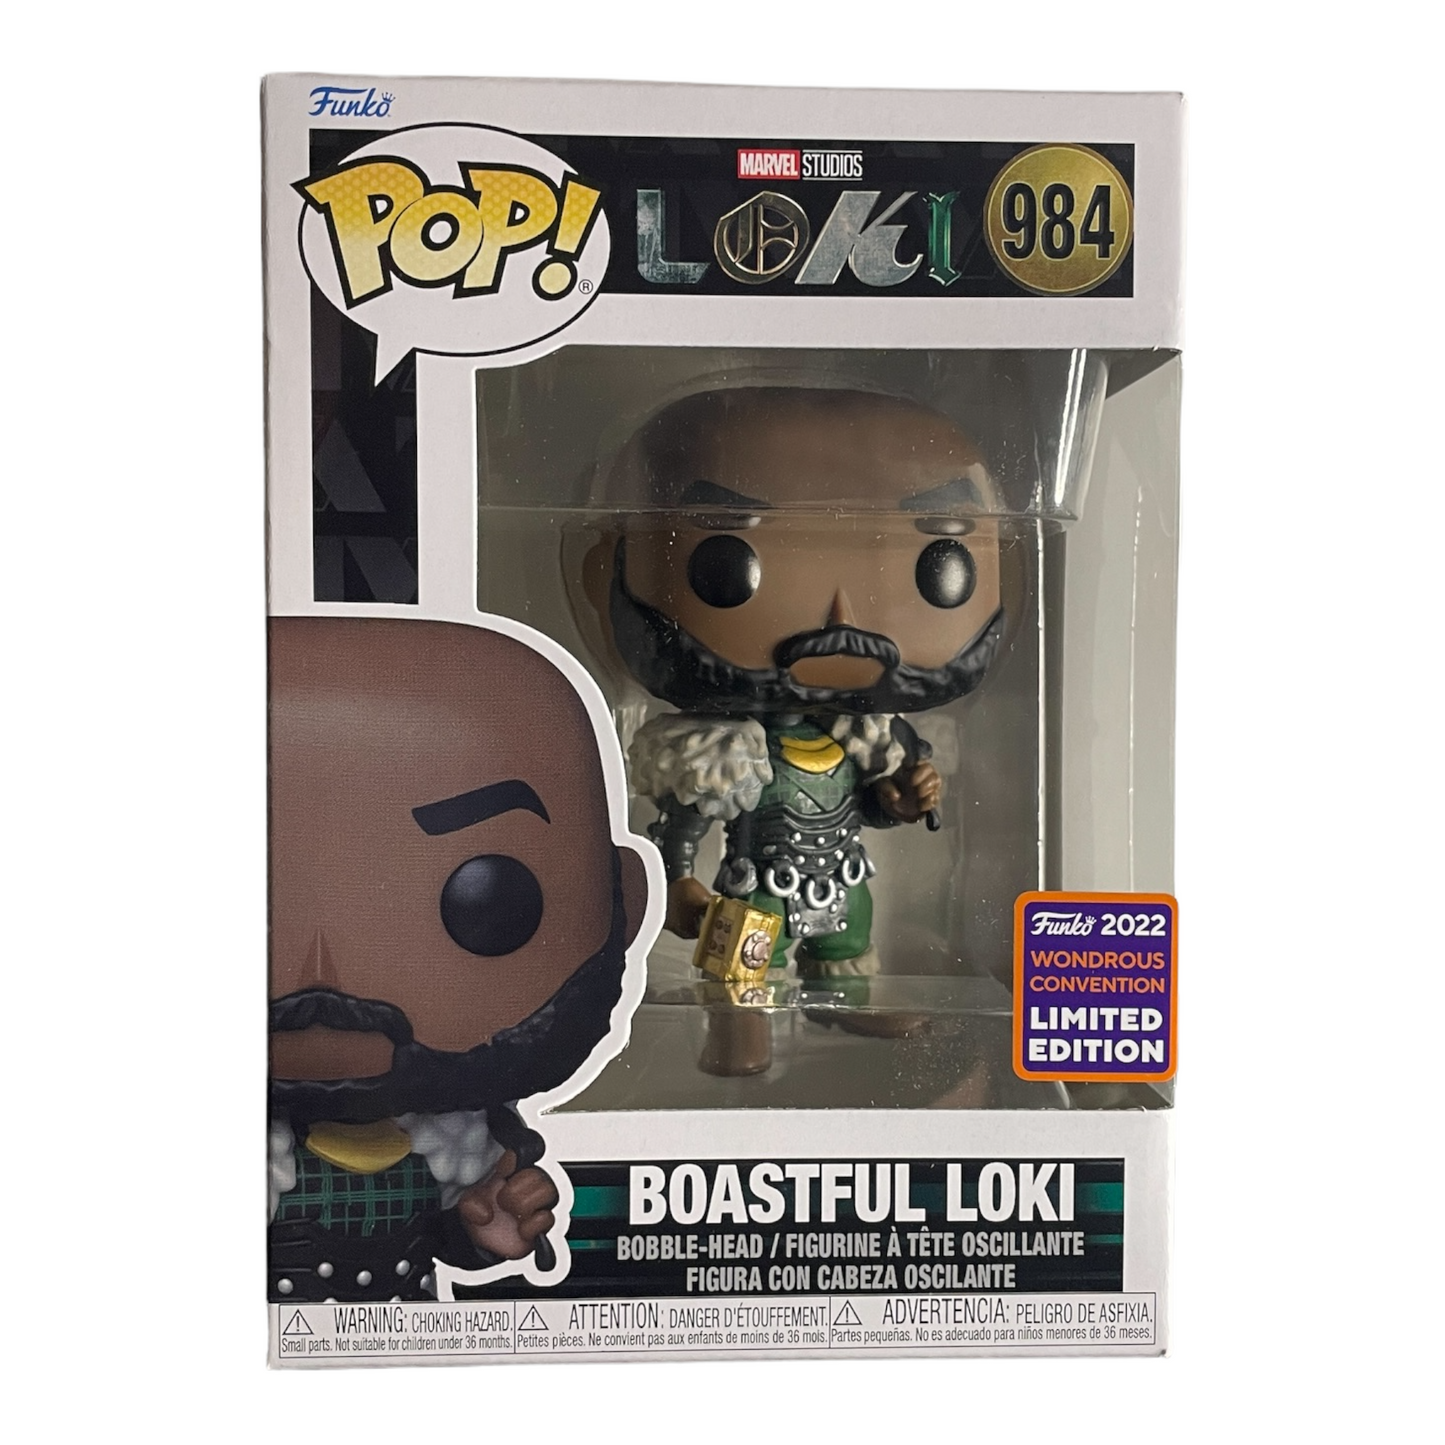 Boastful Loki #984